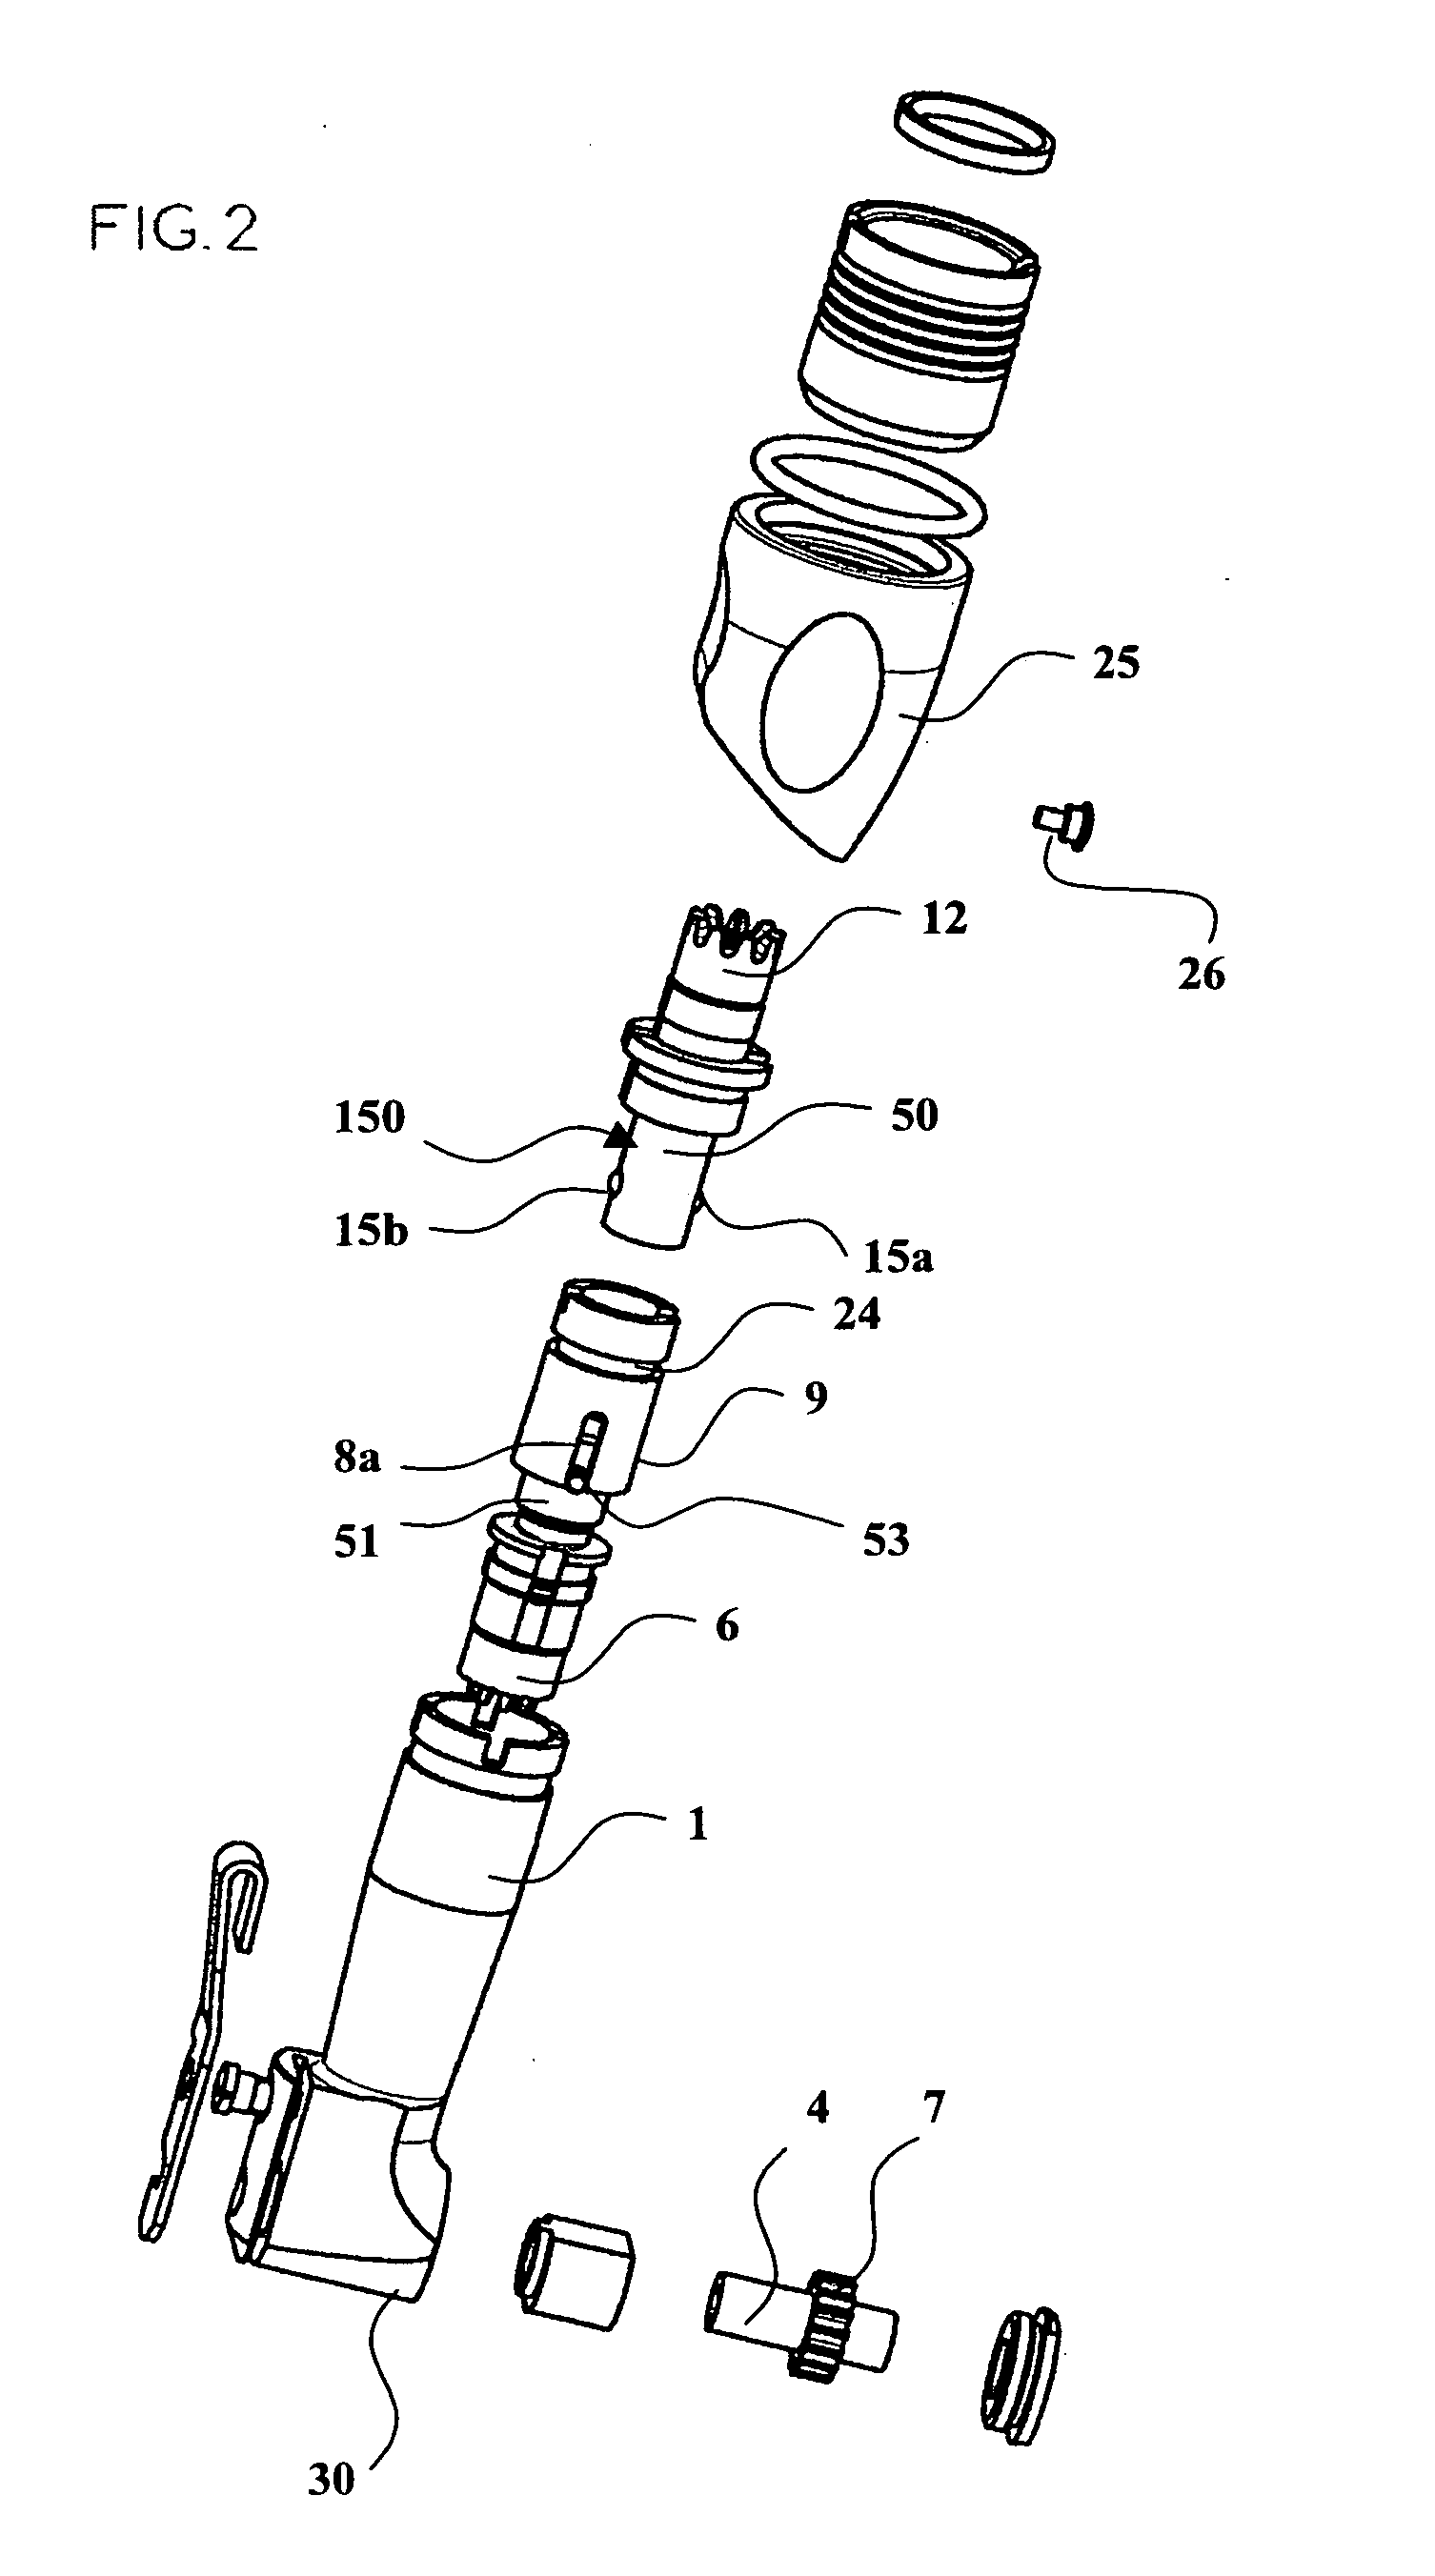 Dental handpiece comprising torque-limiting means